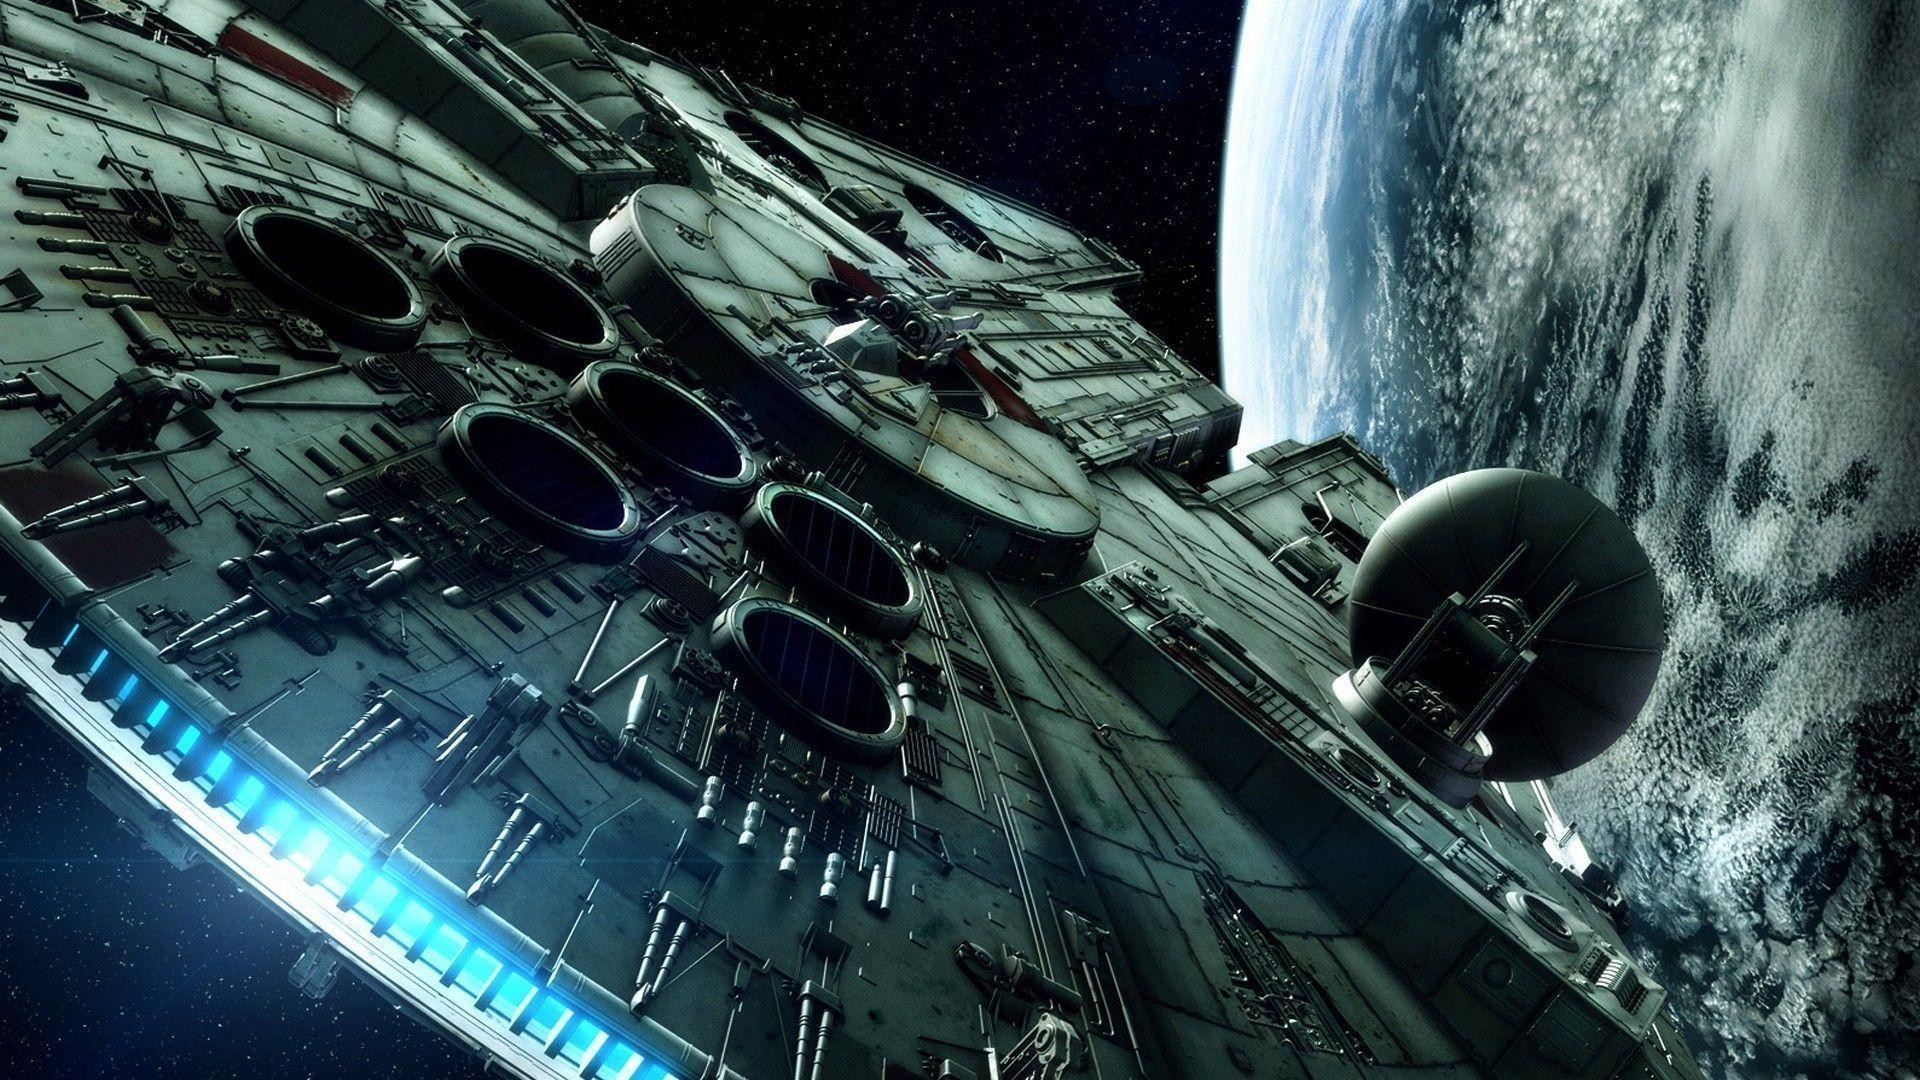 The Millenium Falcon – Star Wars wallpaper – Free Wide HD Wallpaper